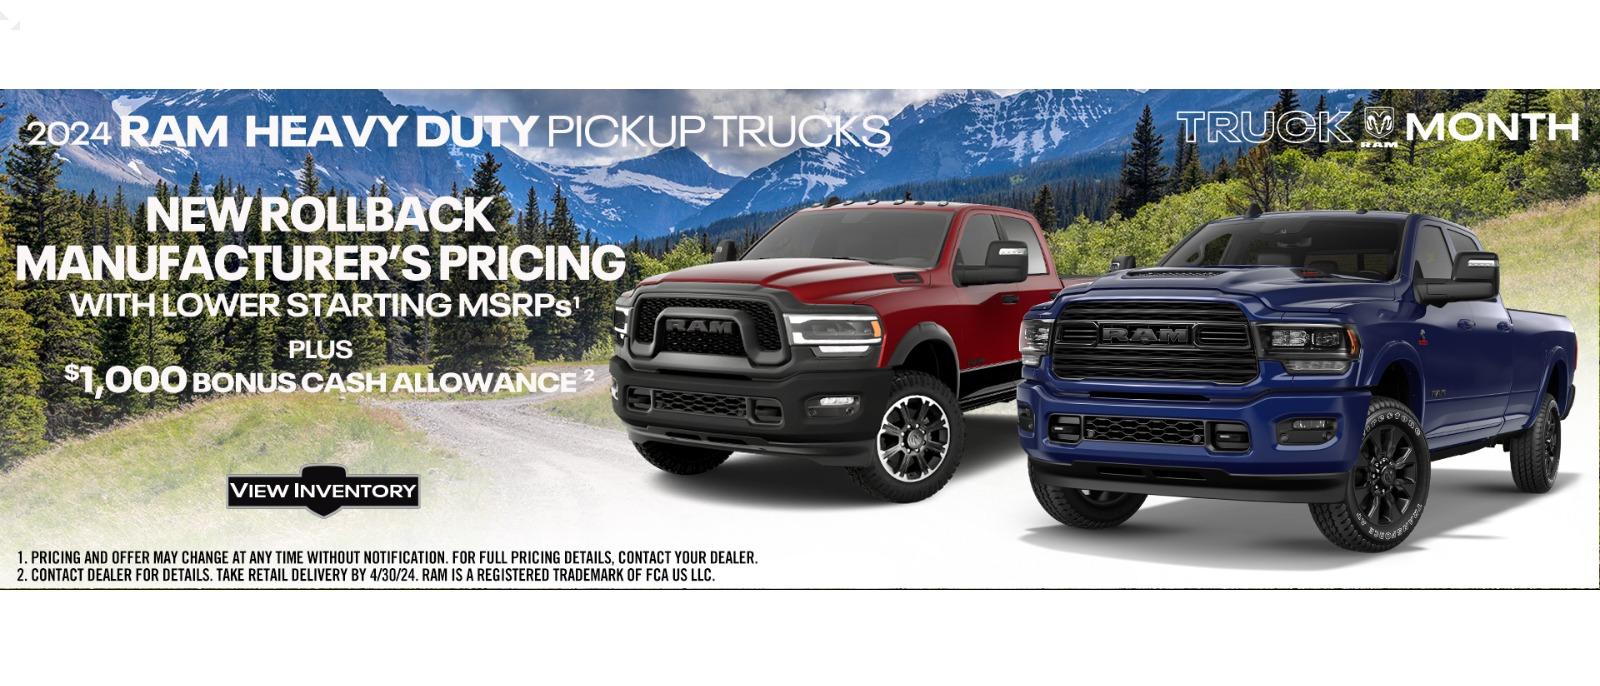 2024 RAM Heavy duty pickup trucks
$1,000 bonus cash allowance